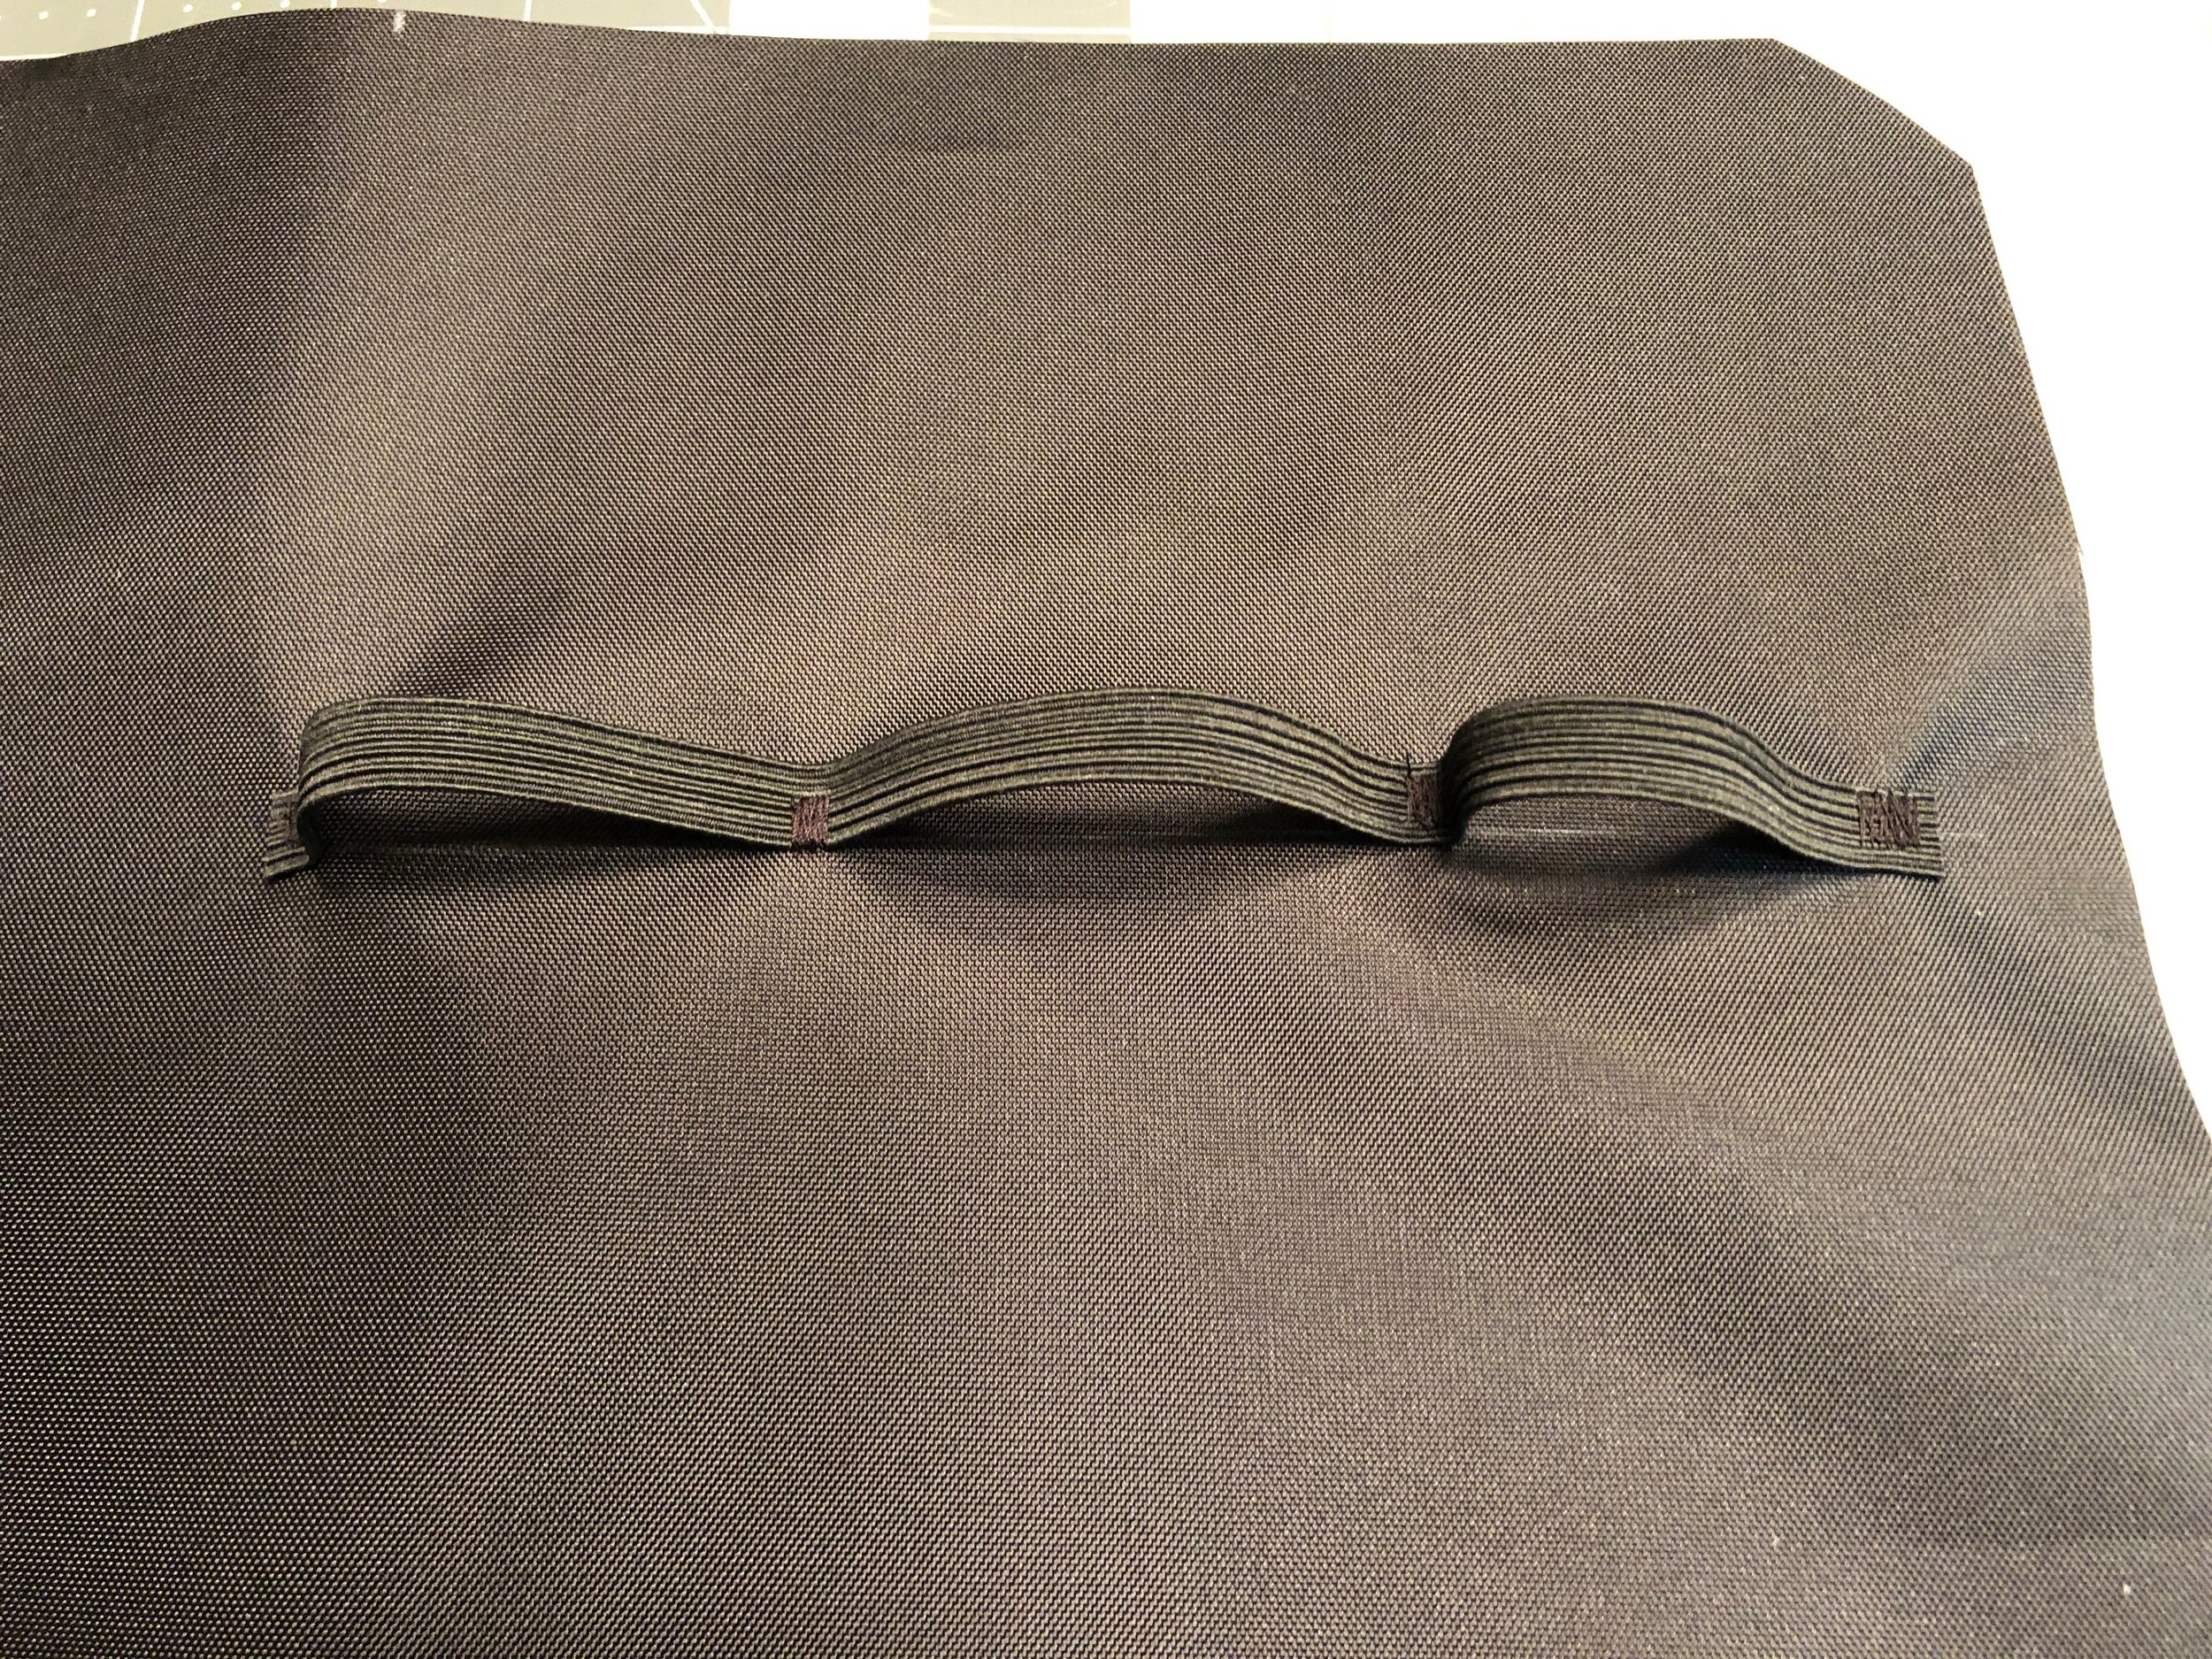  Sew elastic down using a zigzag.  